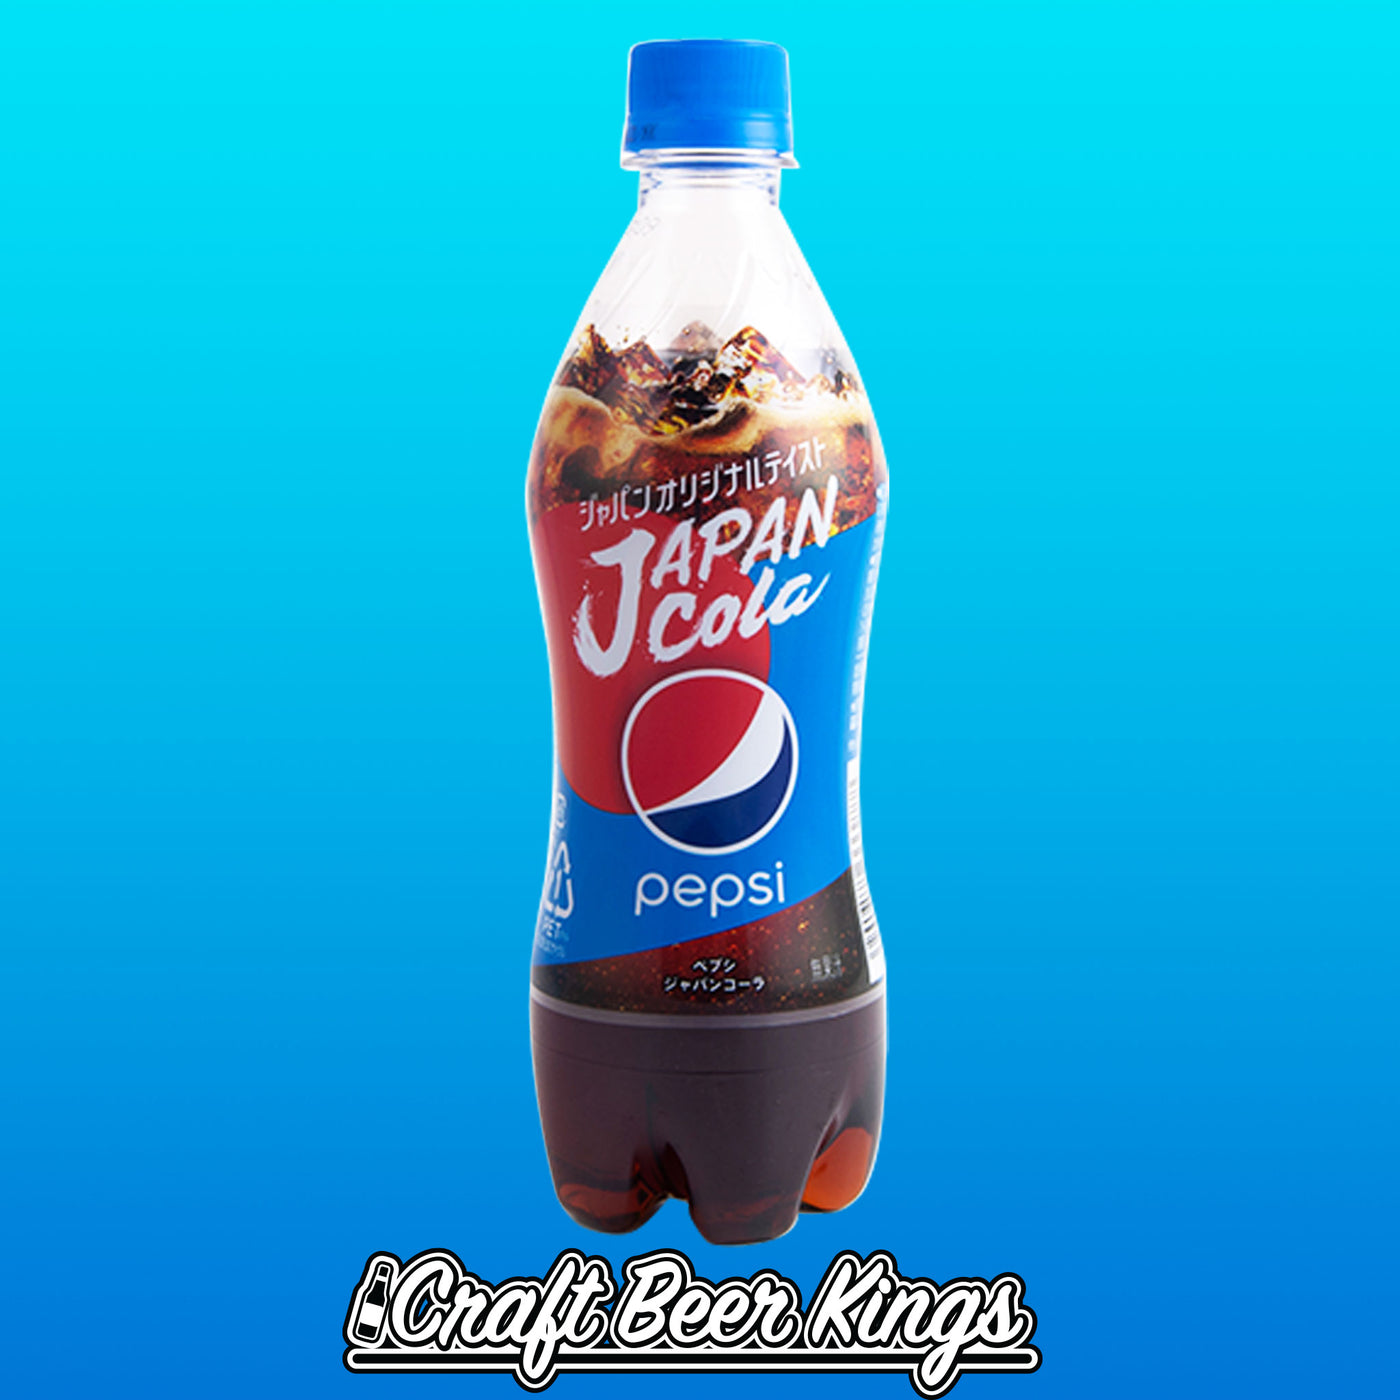 Pepsi - J Cola  - Japan